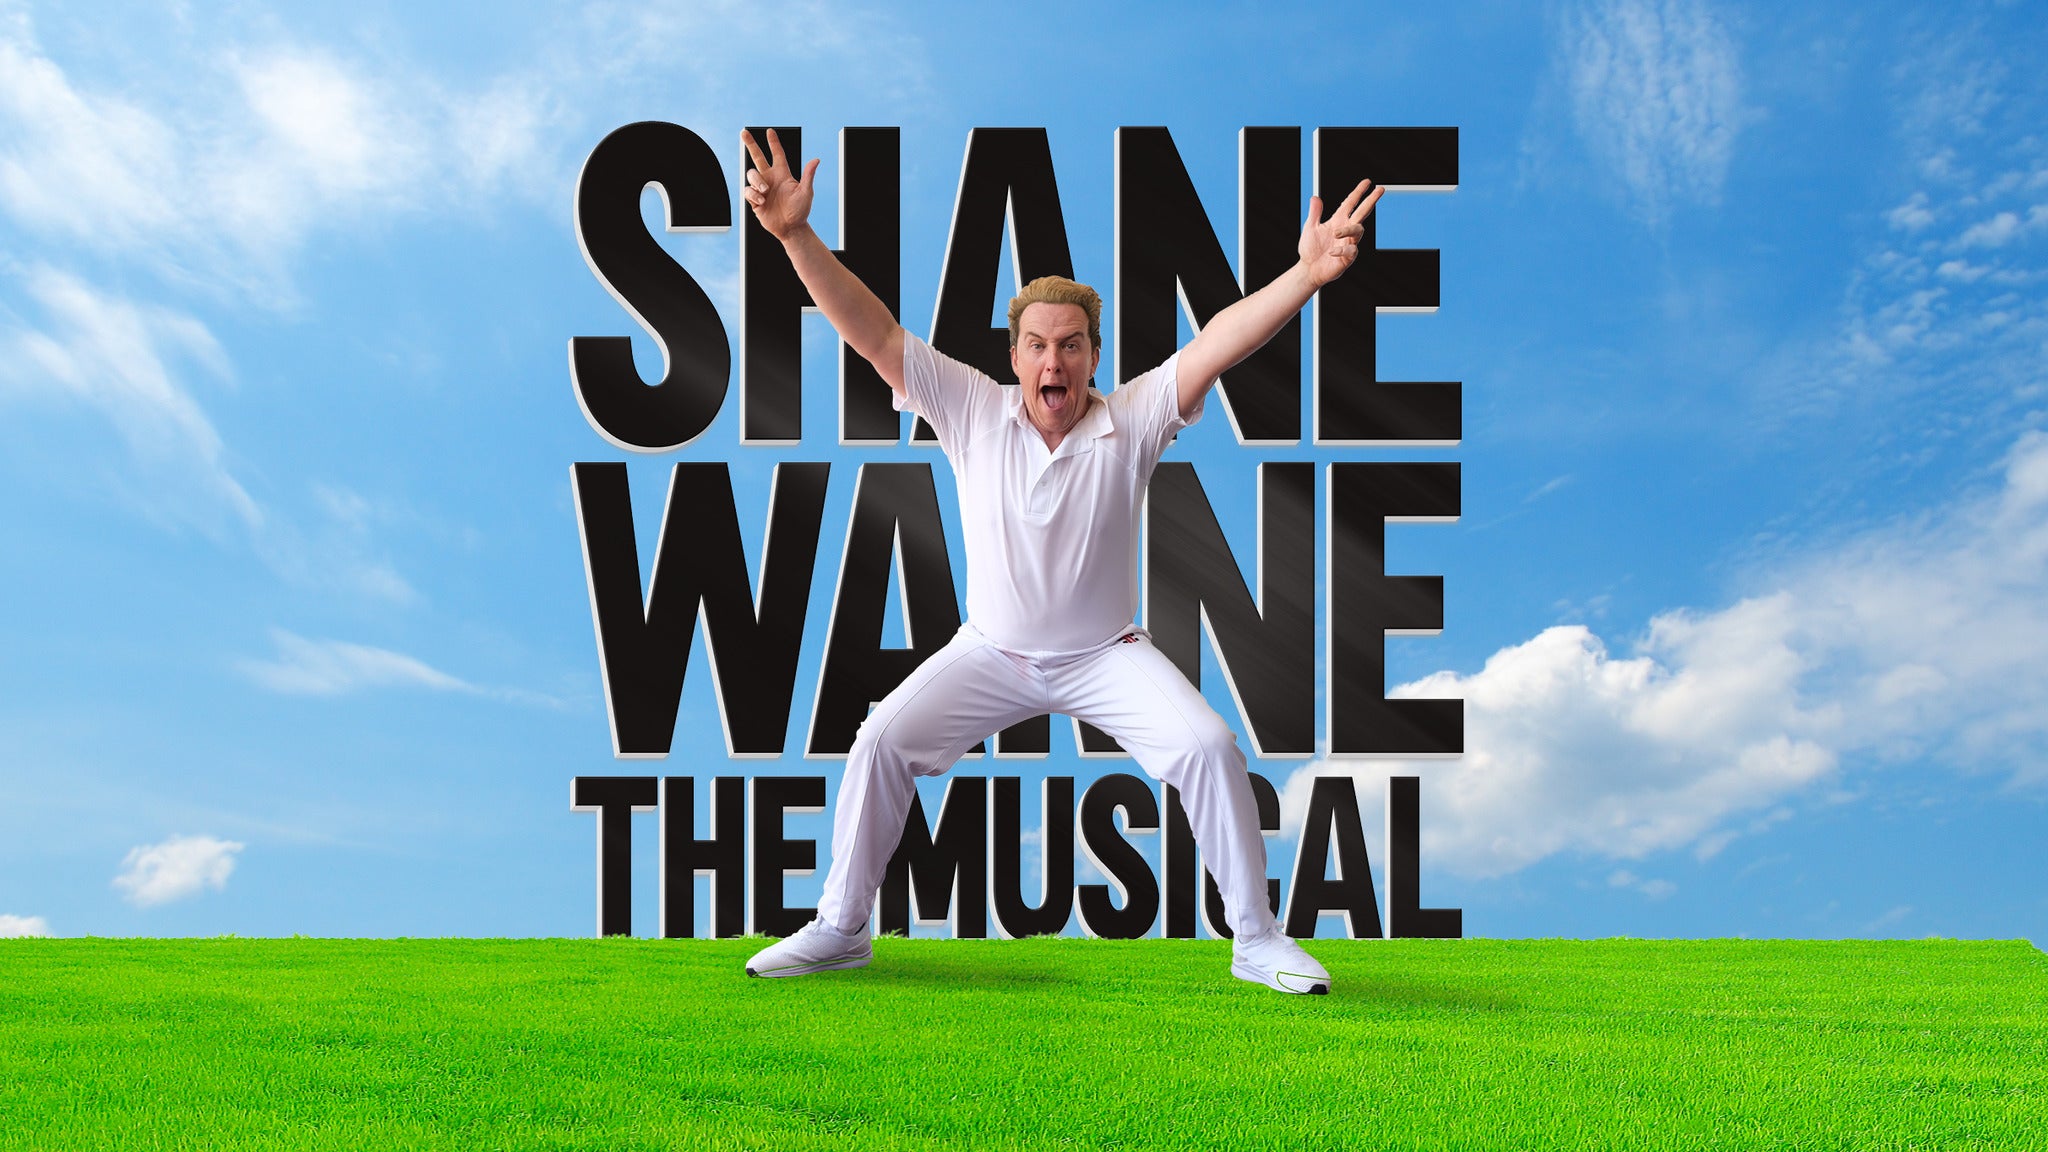 Shane Warne the Musical